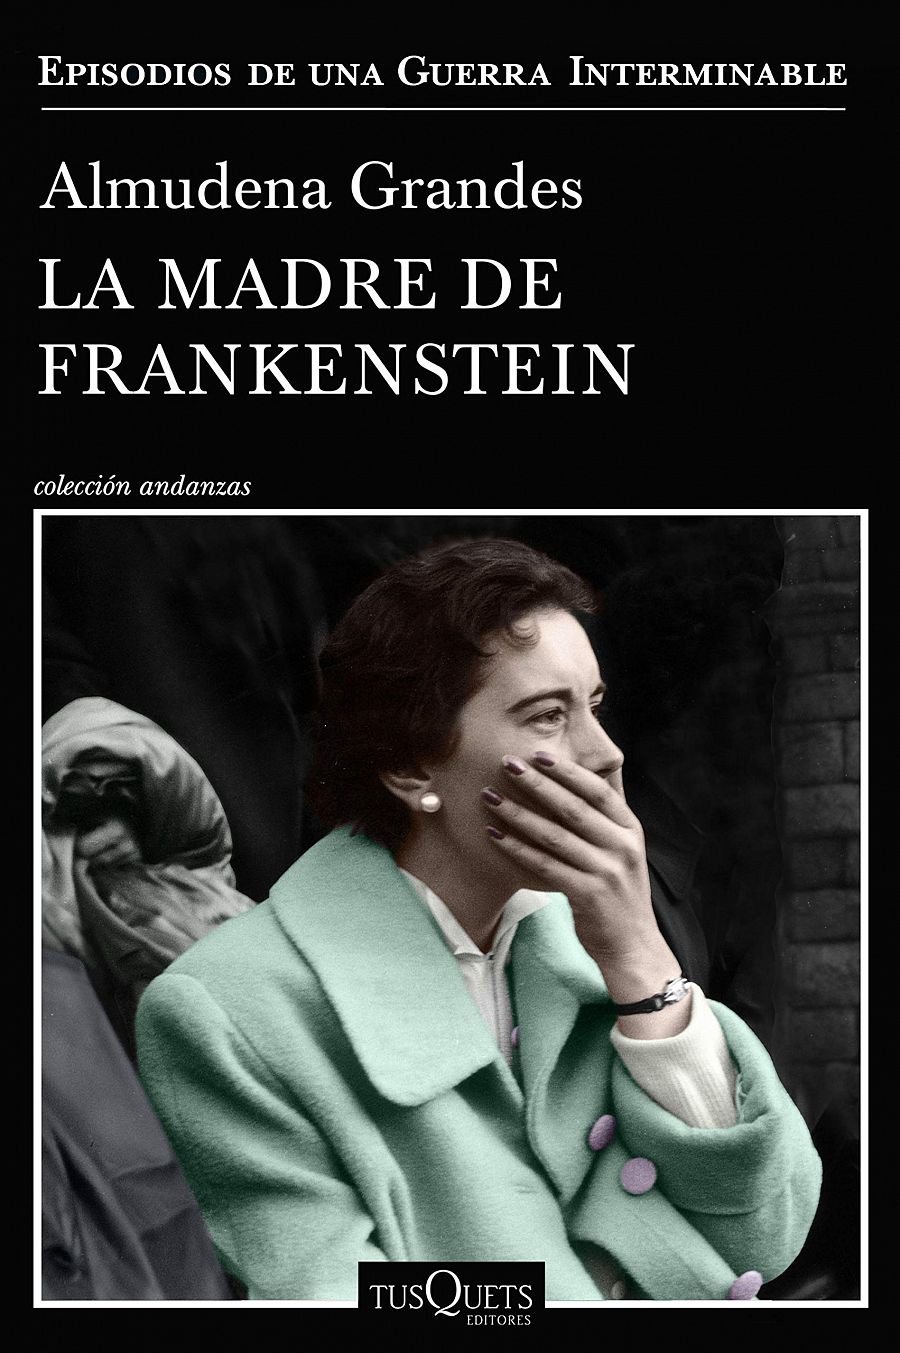 La madre de Frankenstein, una novela de Almudena Grandes